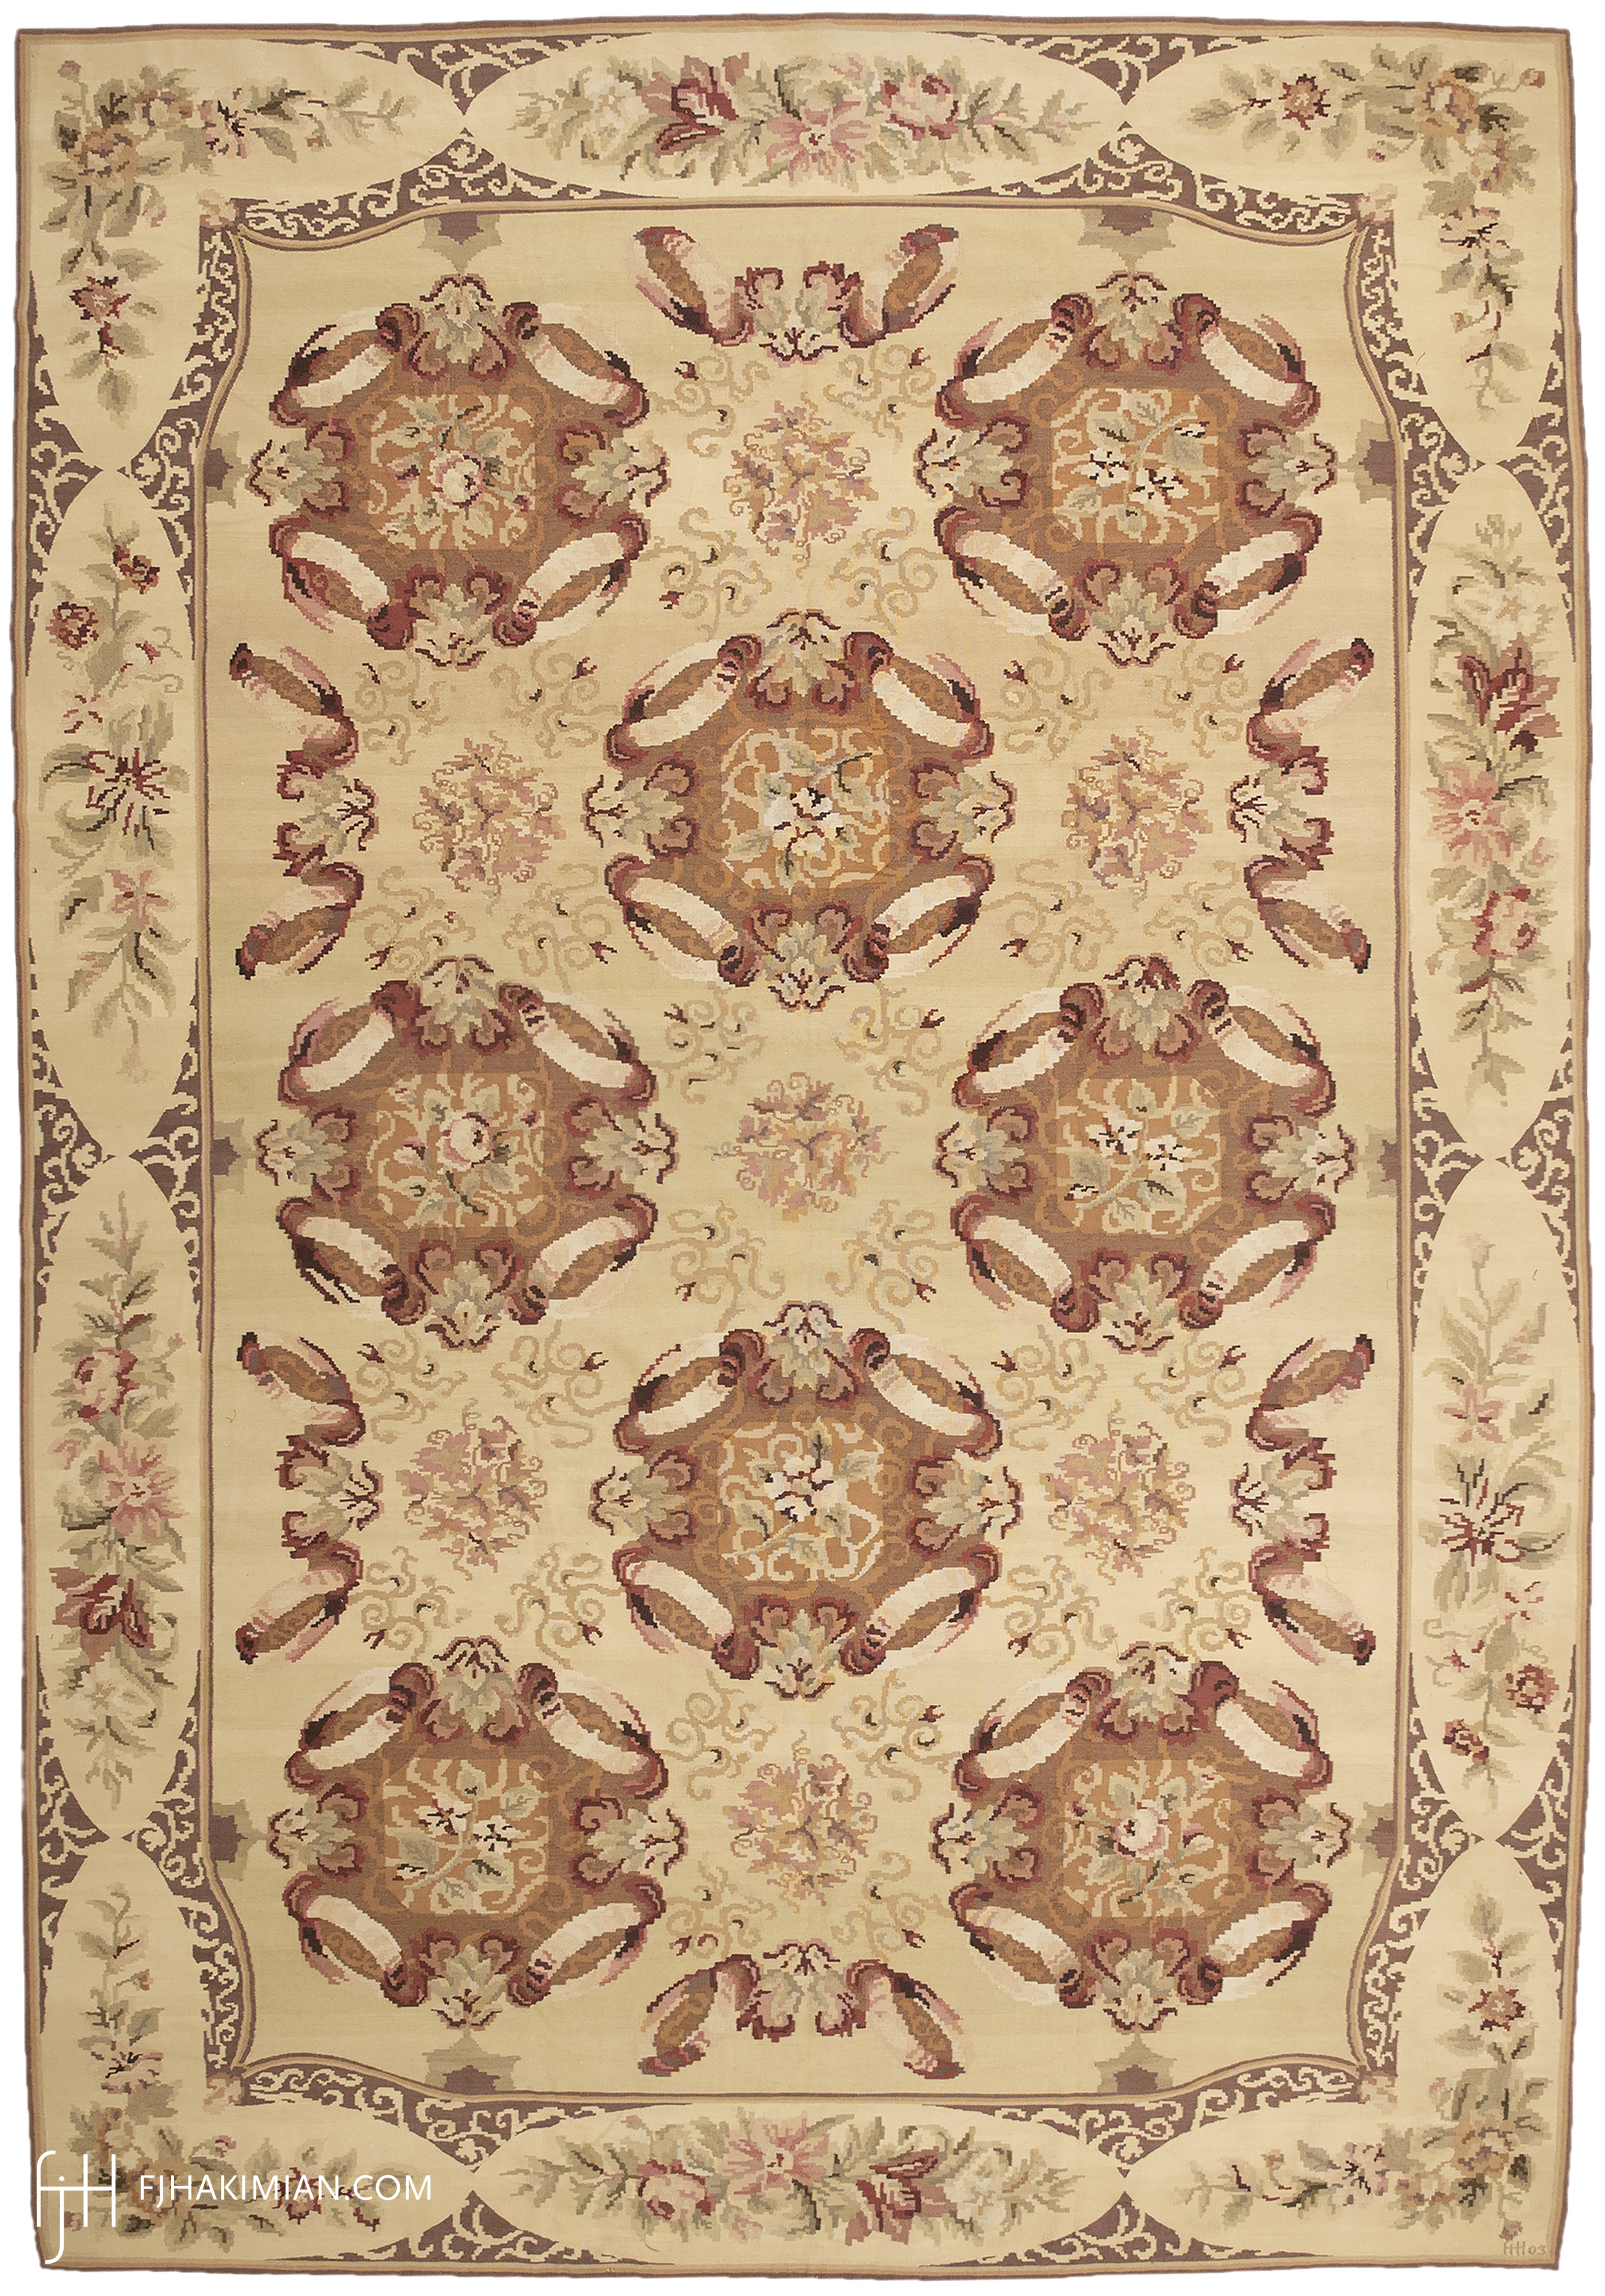 16417 Ring Of Roses | Custom Traditional Design Carpet | FJ Hakimian | Carpet Gallery in NYC